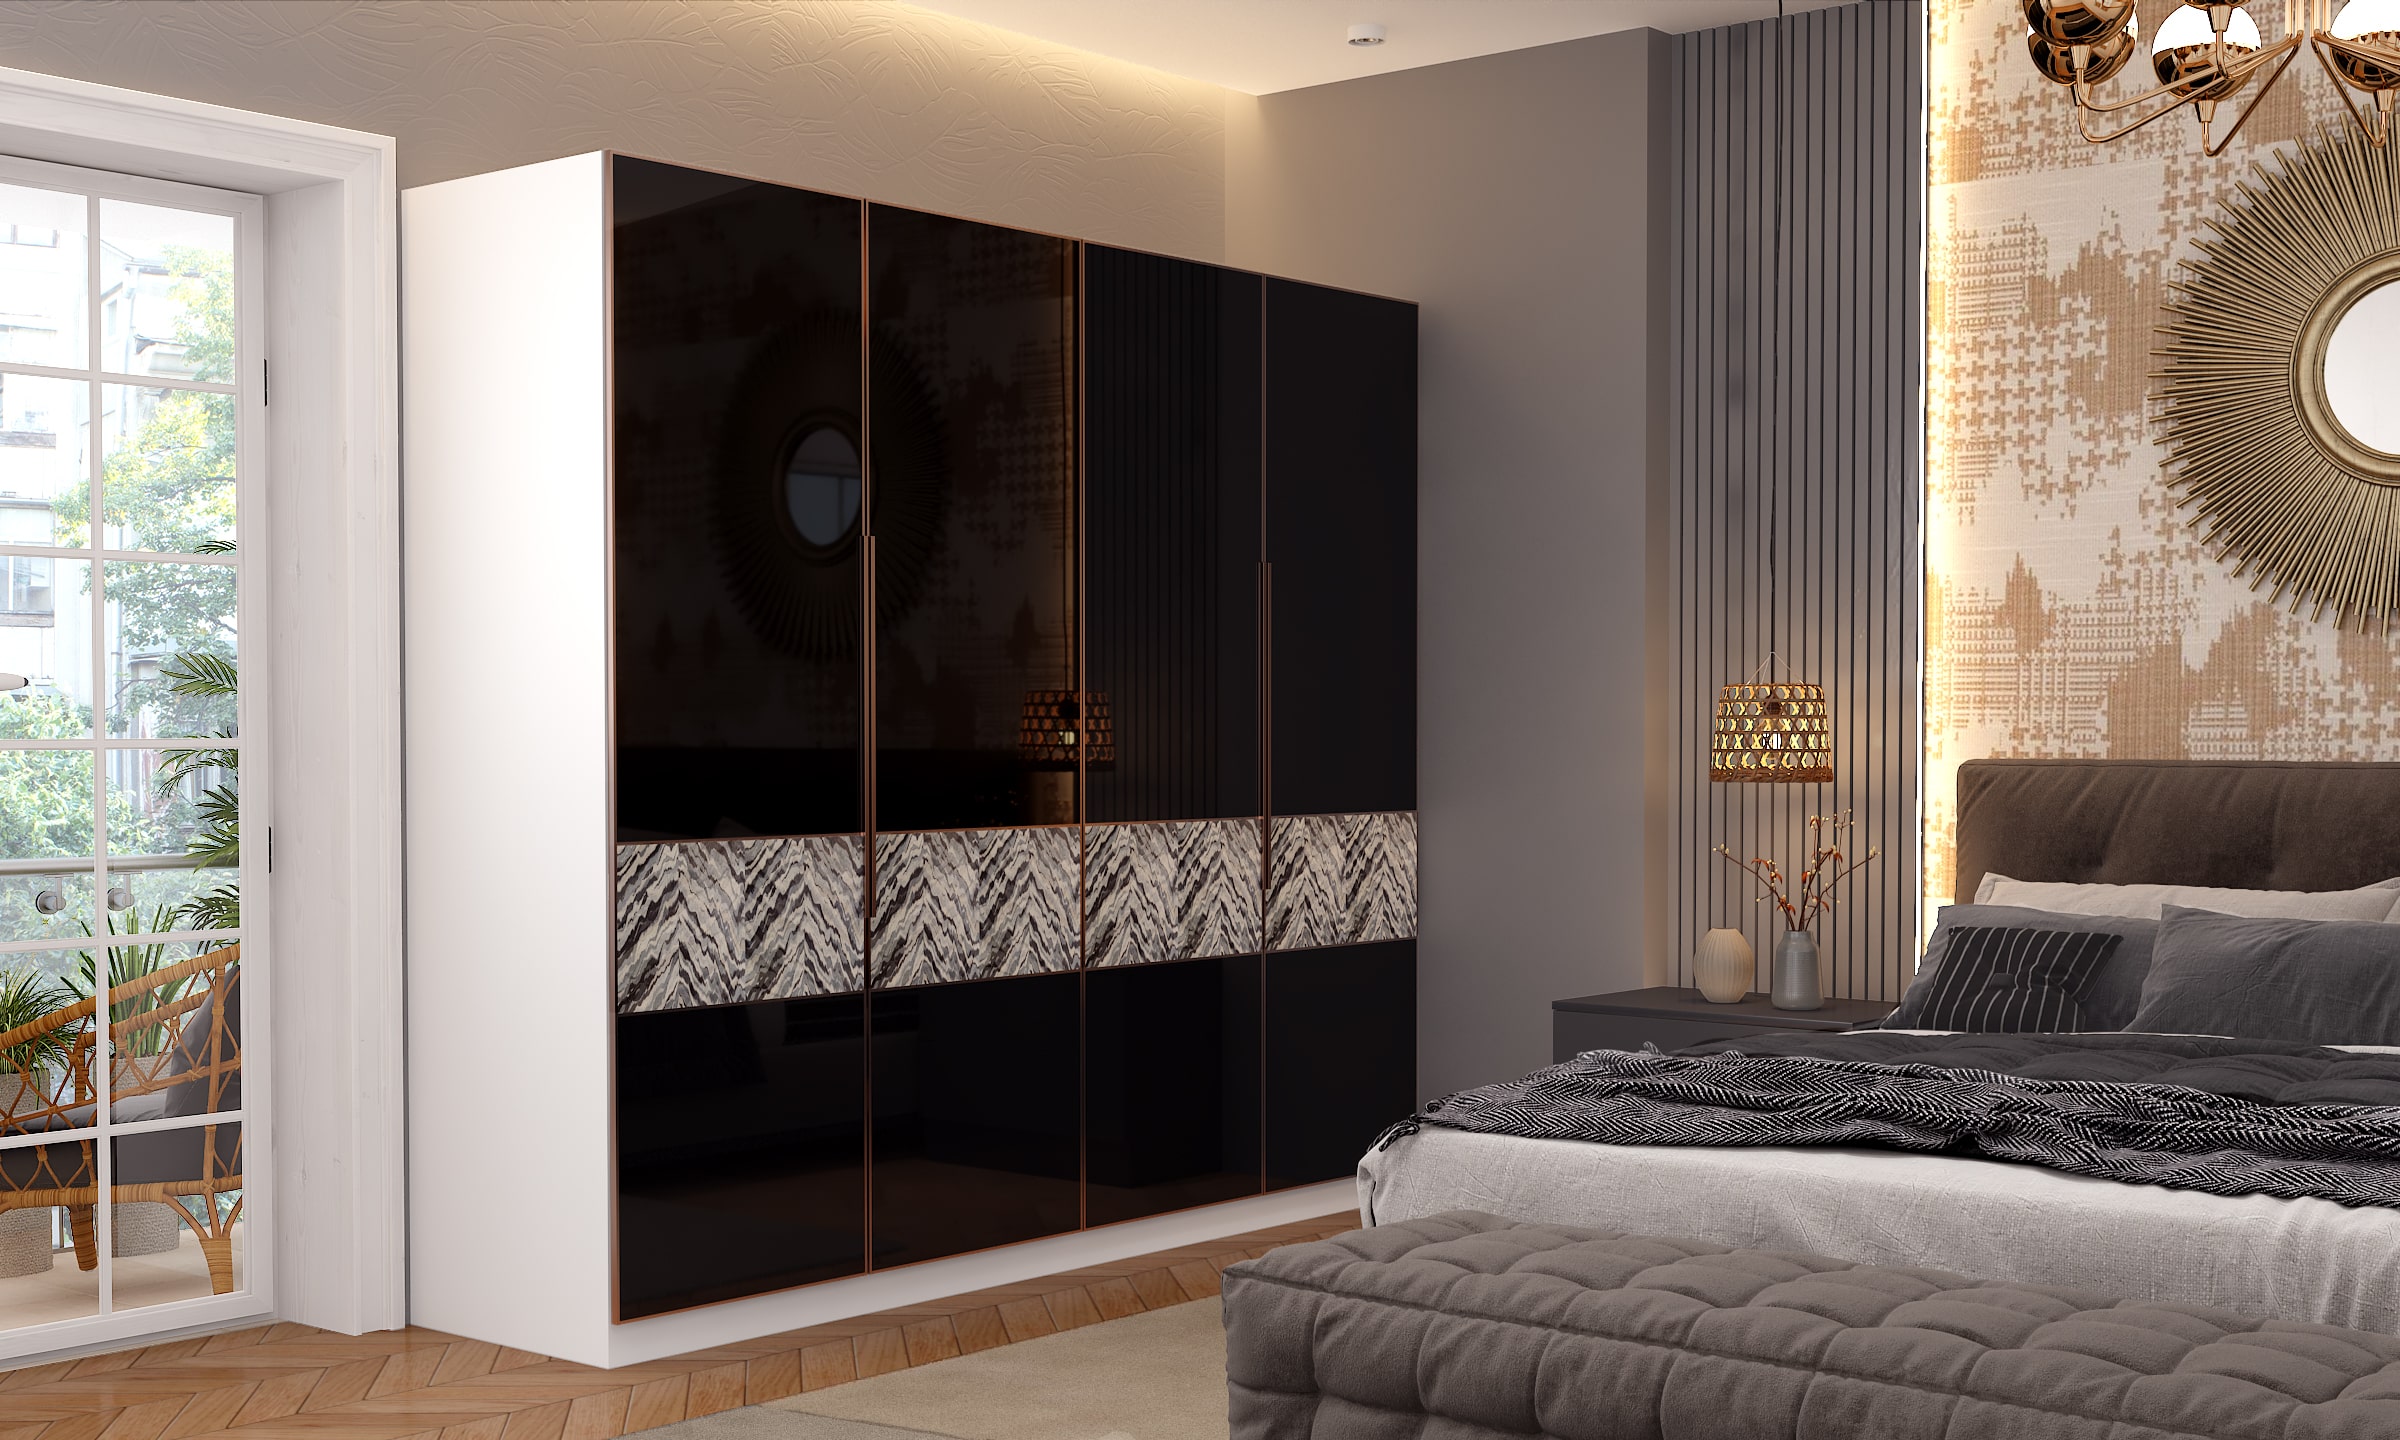 Luxury bedroom interior design with black sliding door wardrobe